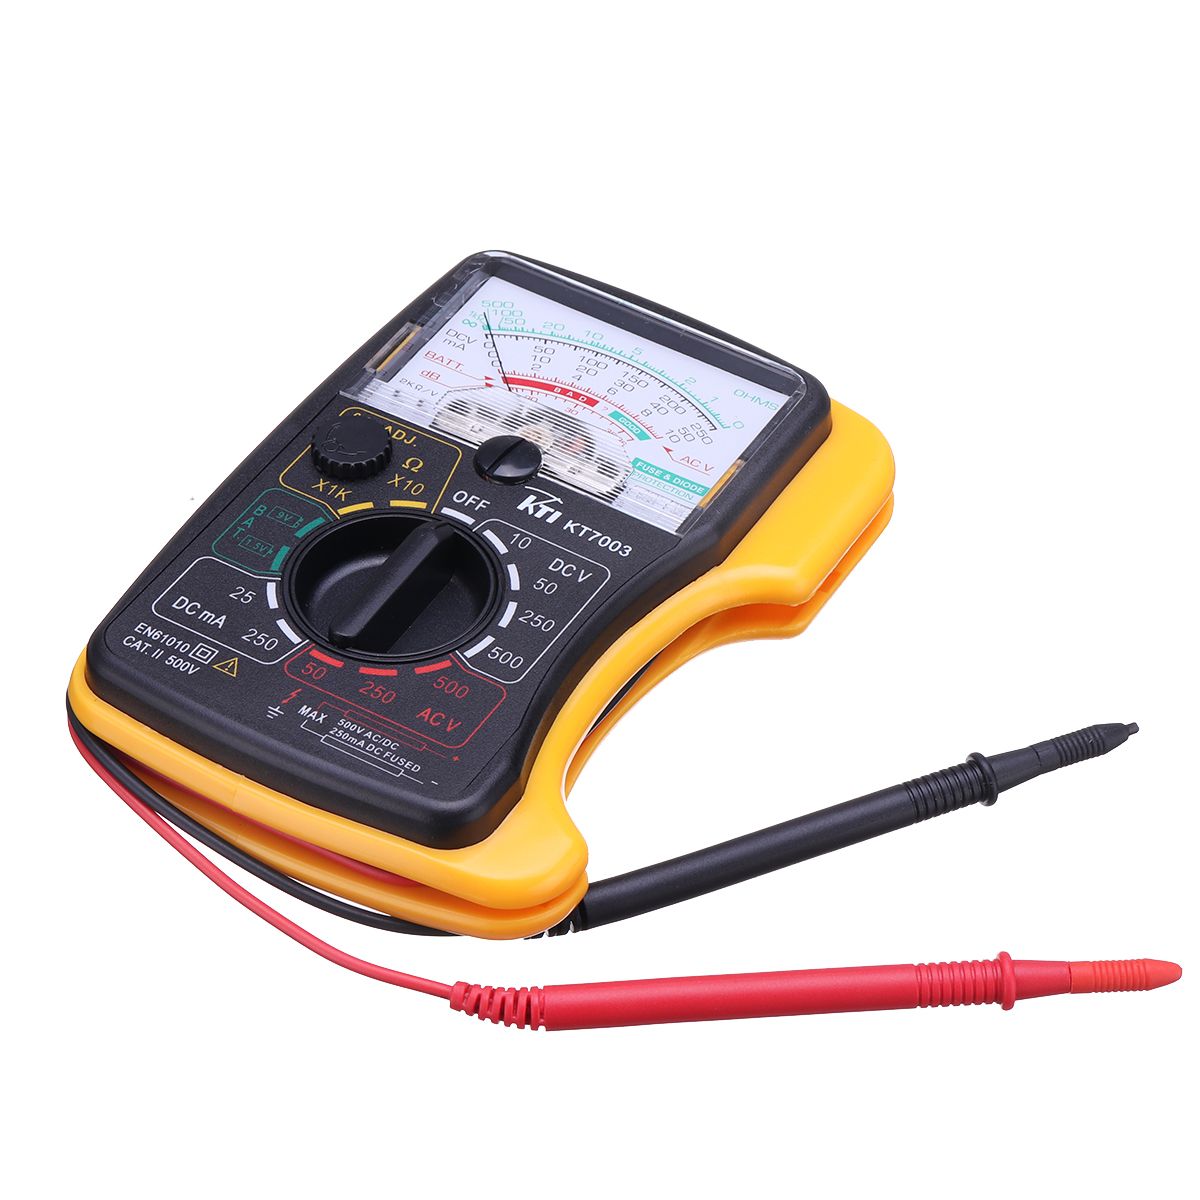 KTI-KT7003-Mini-Analog-Multimeter-Original-Authentic-Overload-Protection-Voltage-Current-Battery-Tes-1435458